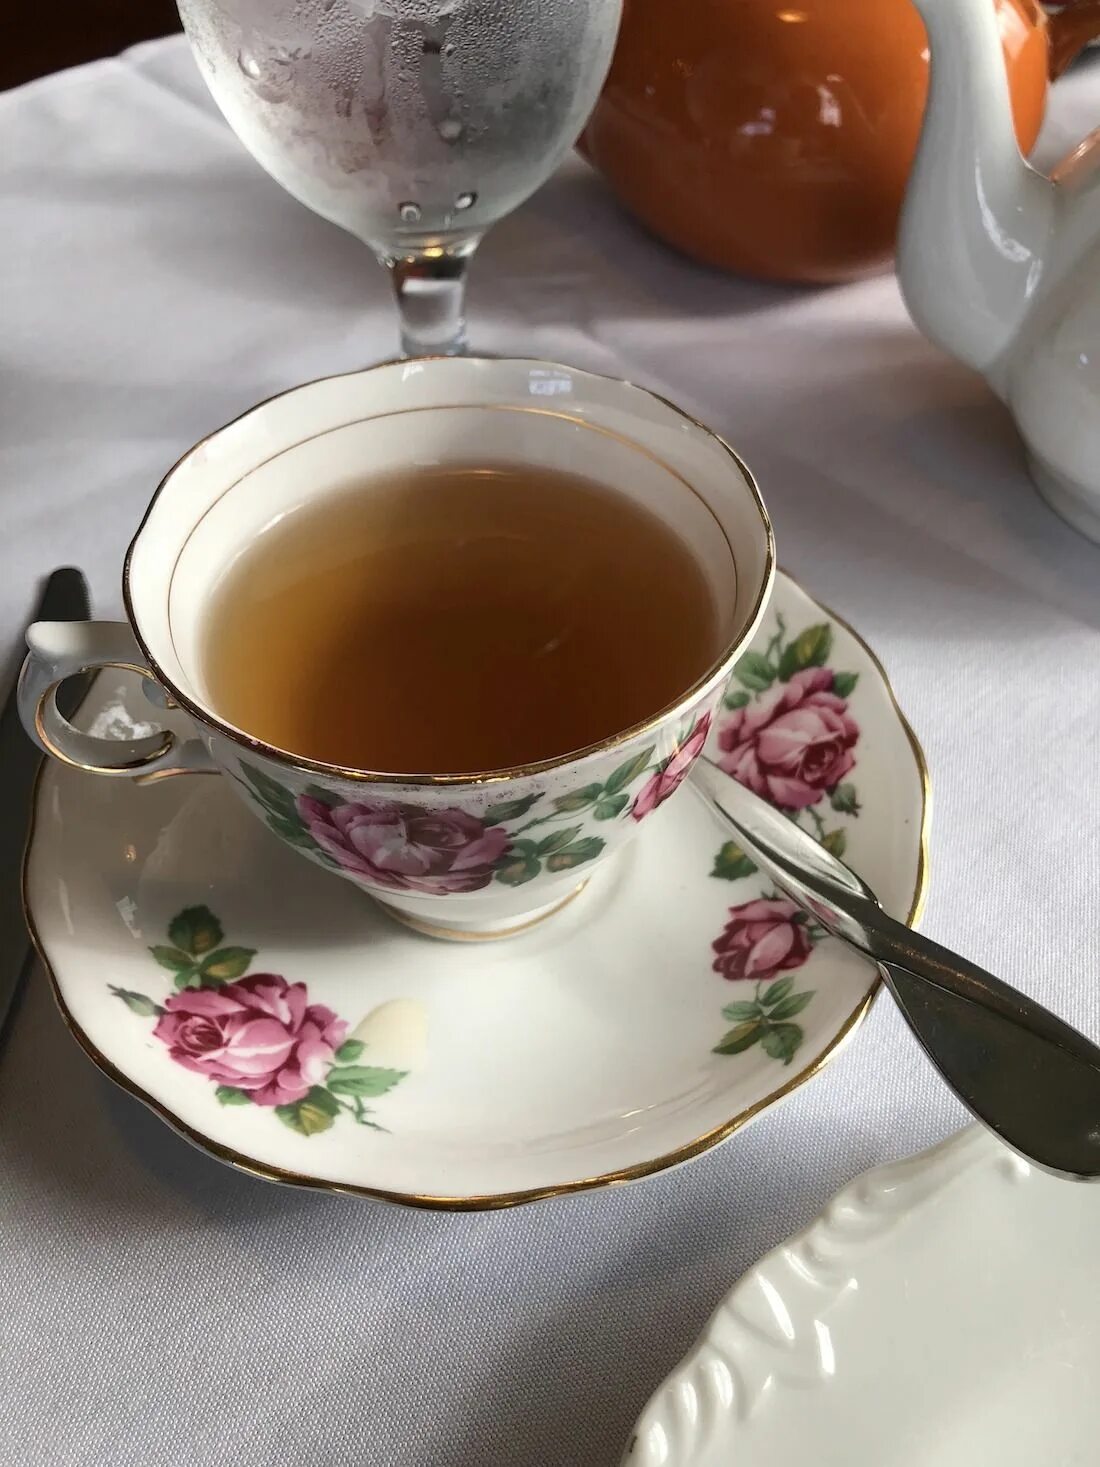 Файф оклок чай. Английский чай. Британский чай. Английское чаепитие. Чаепитие на английском